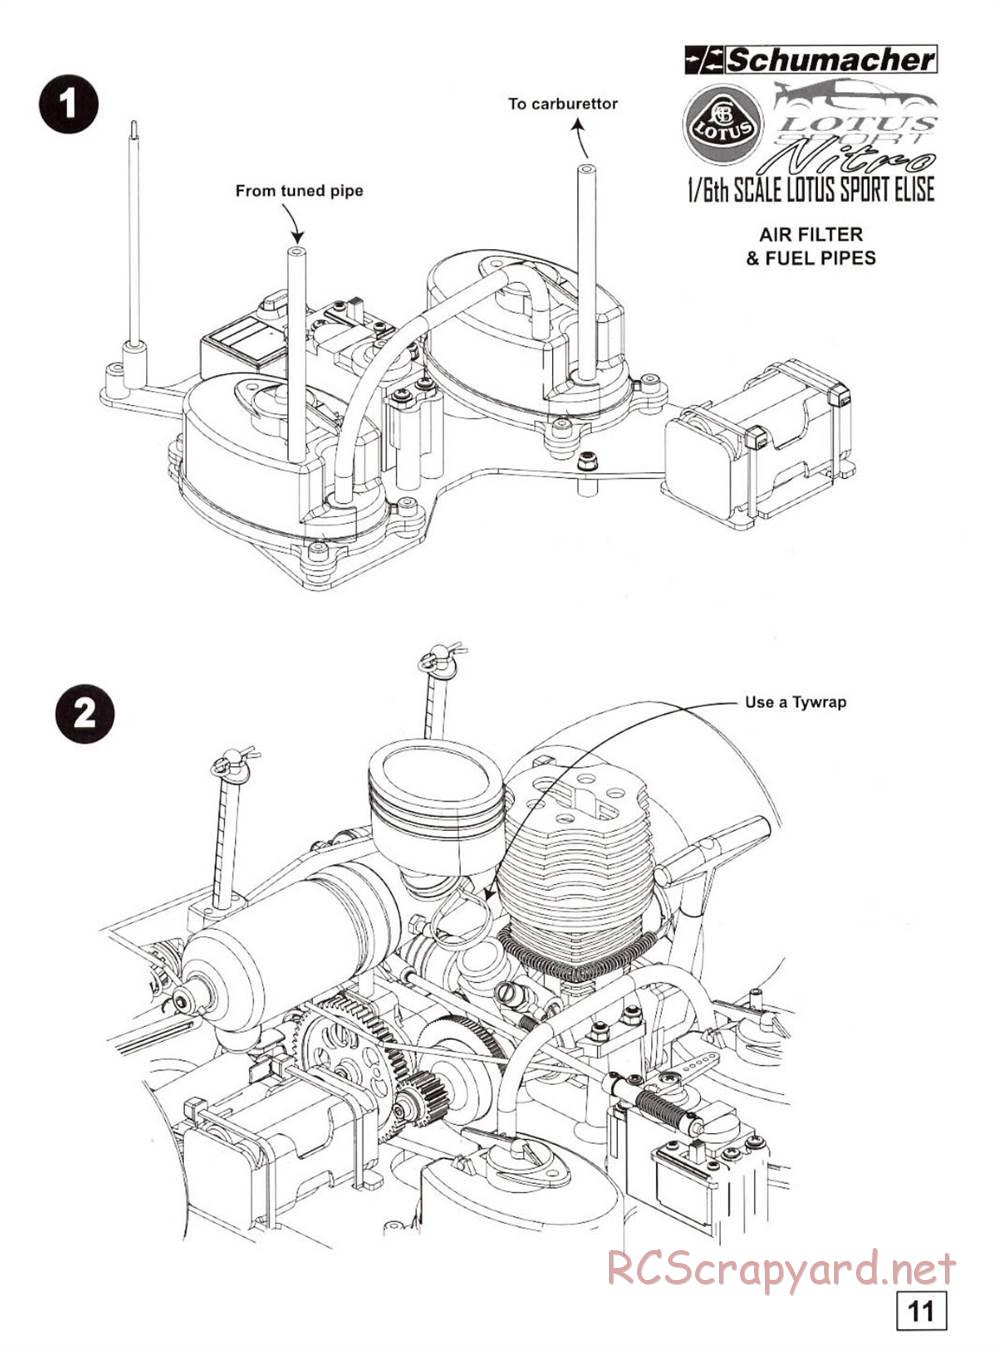 Schumacher - Big 6 Lotus Nitro - Manual - Page 5